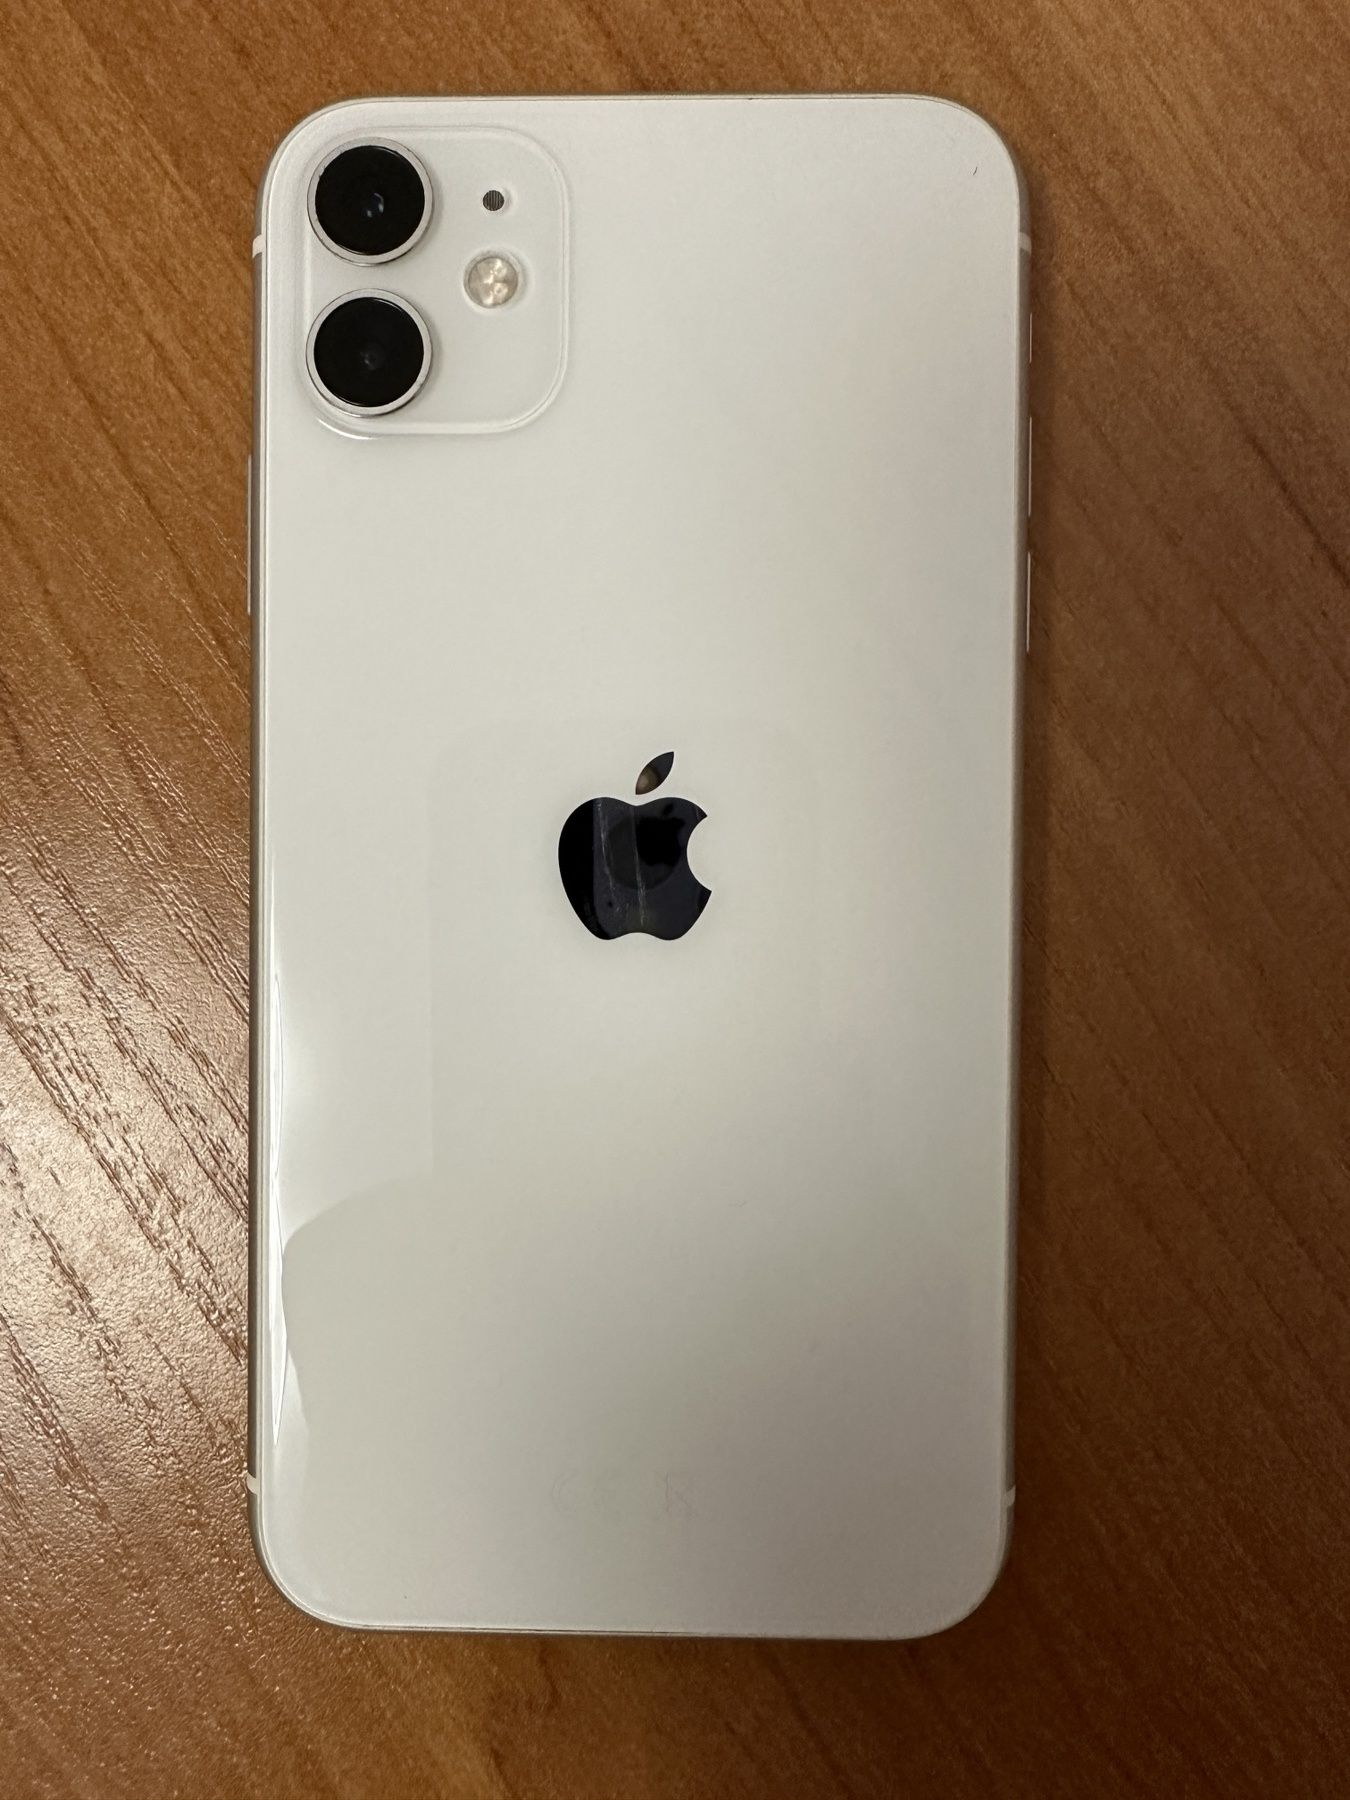 iPhone 11 white 64g.